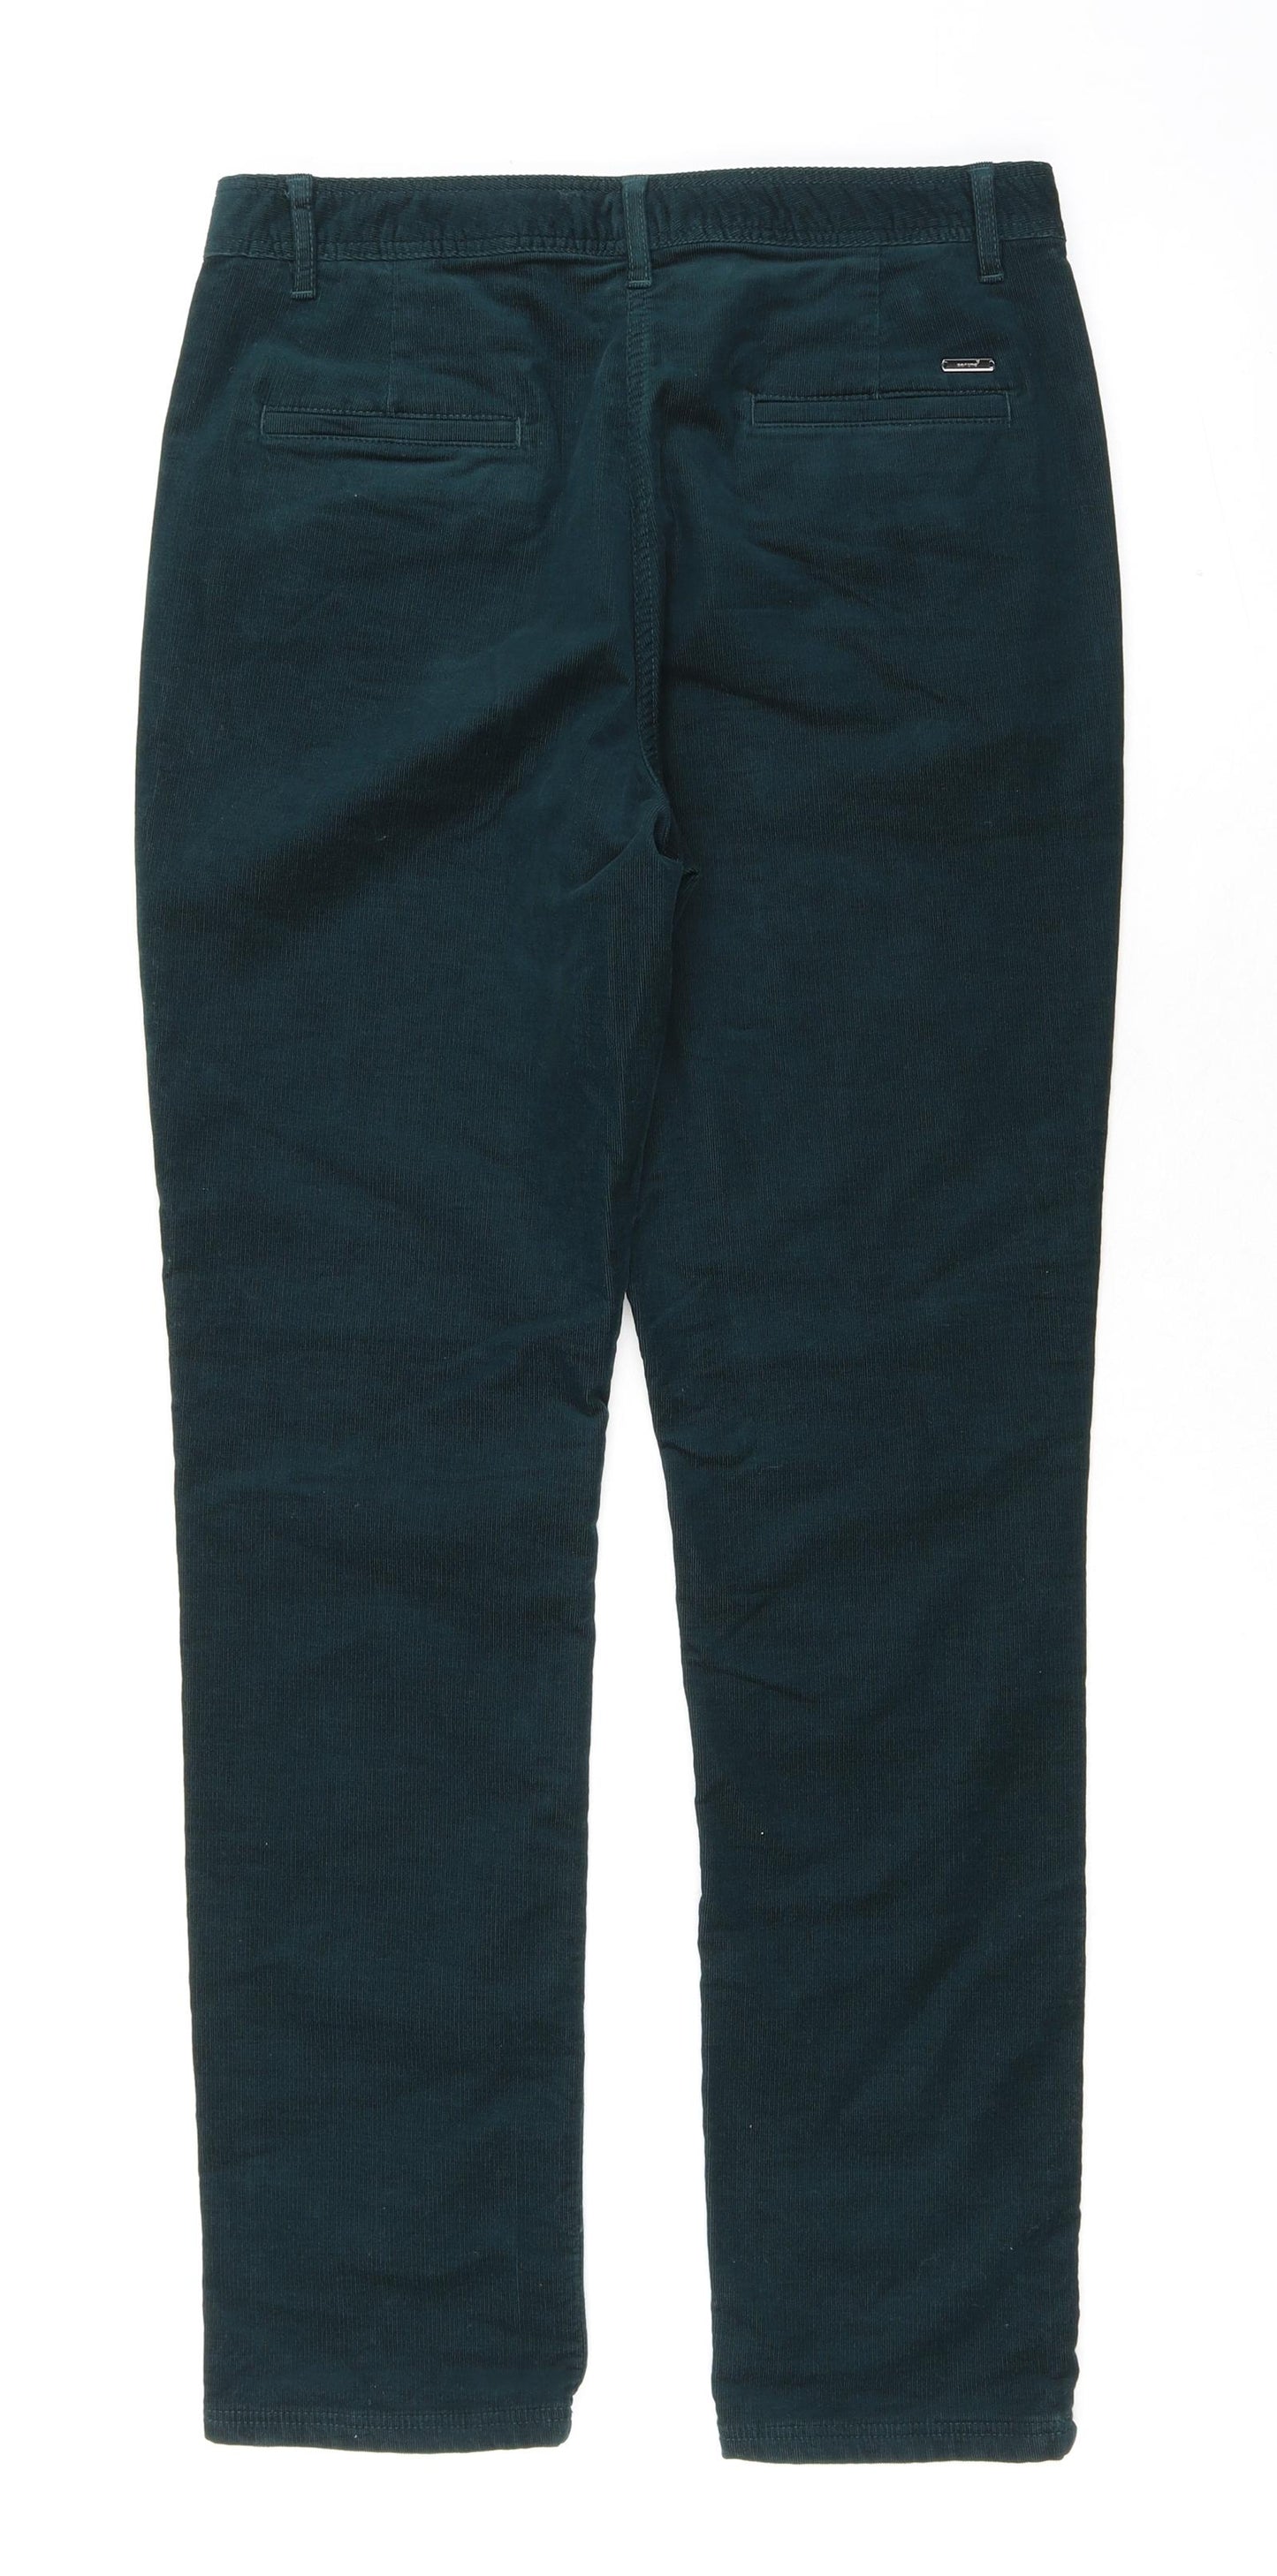 Per Una Womens Green Cotton Trousers Size 10 L30 in Regular Zip